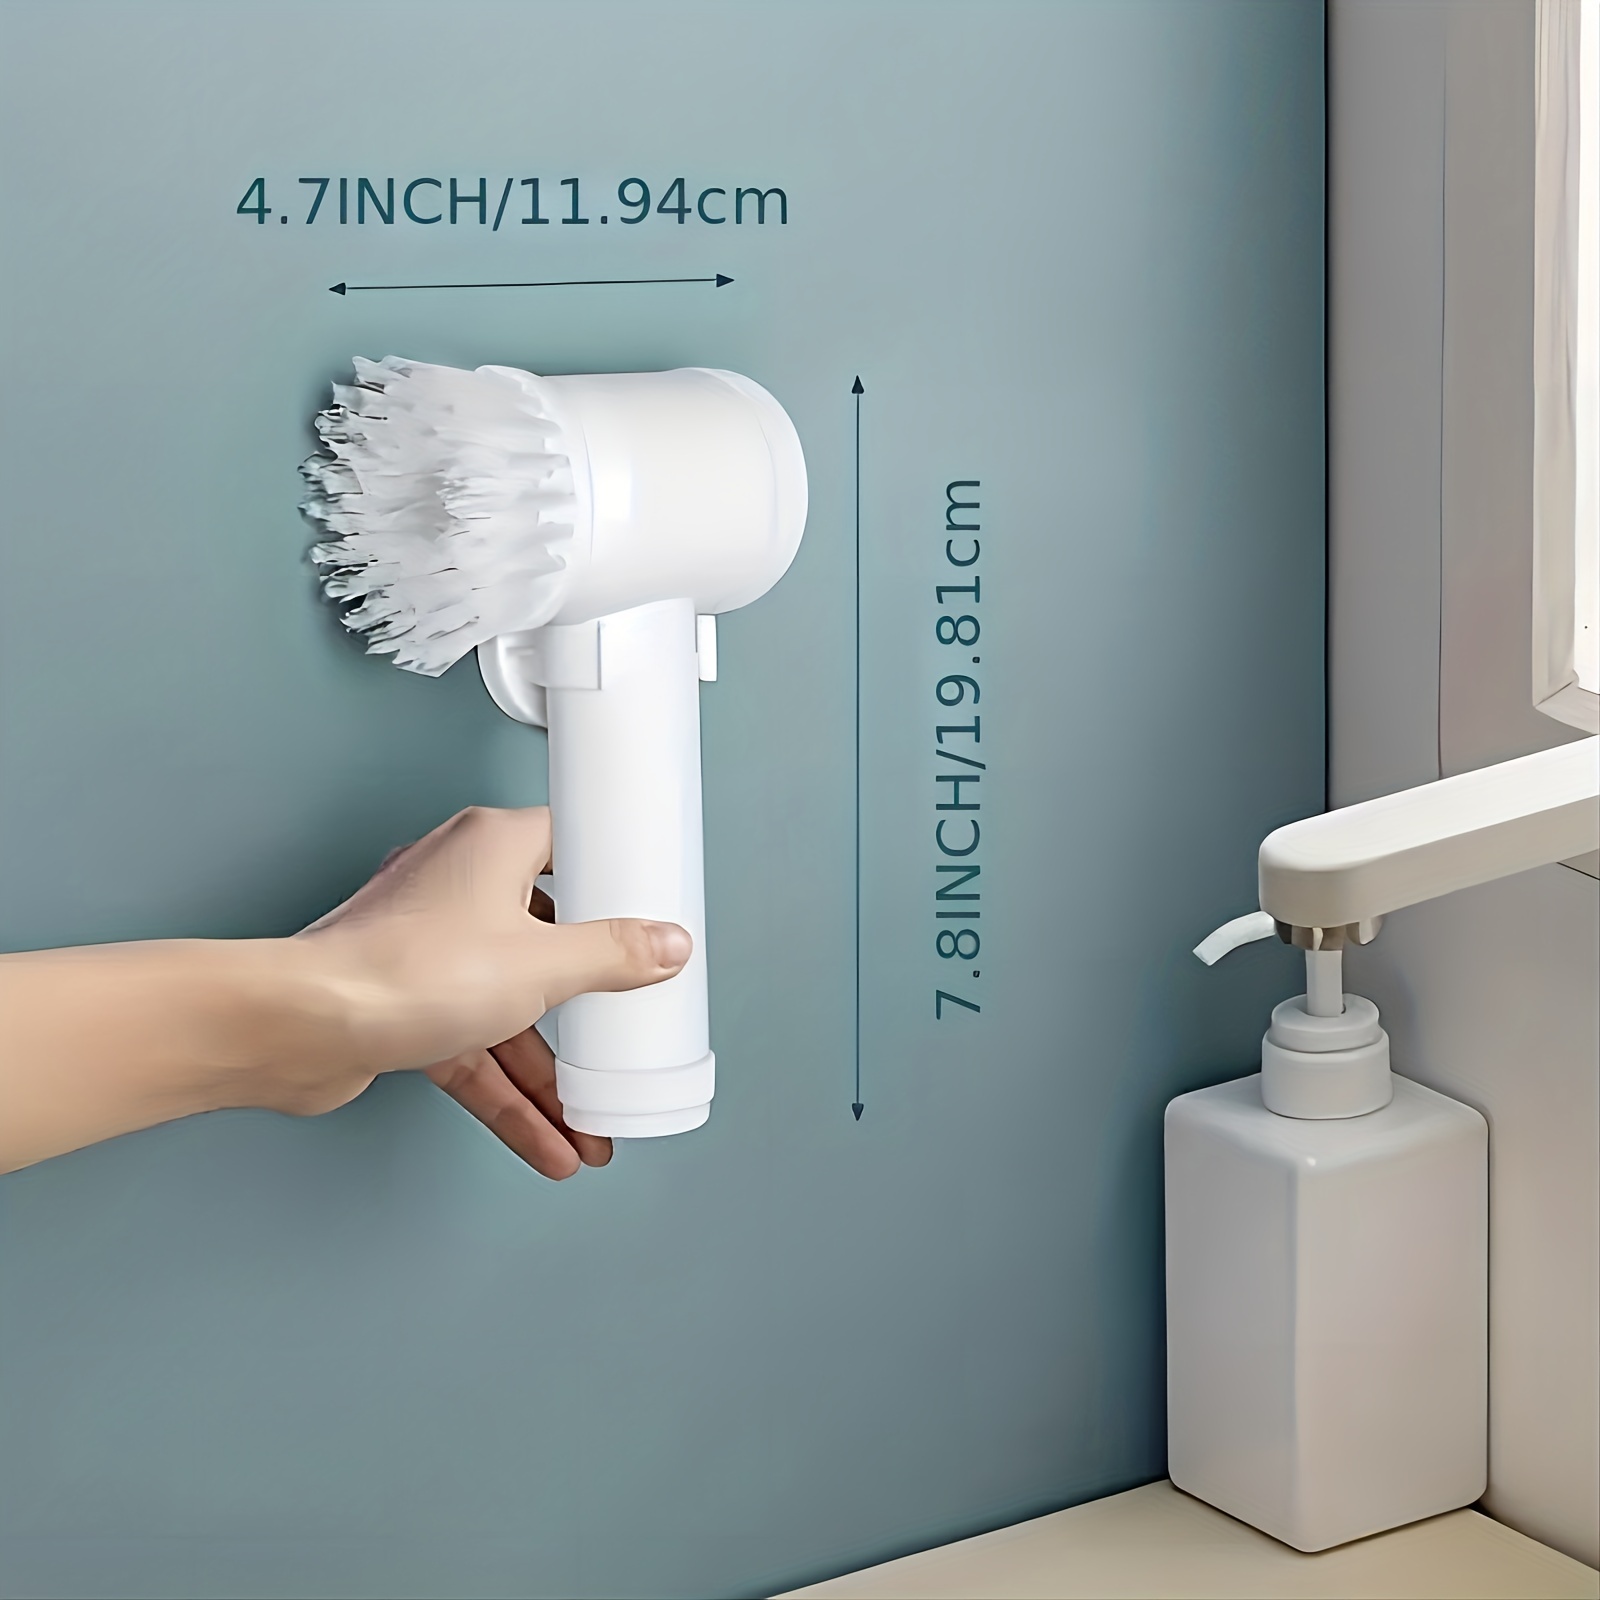 Scrub Brush With Soap Dispenser For Kitchen, Walls, Shower, Tile